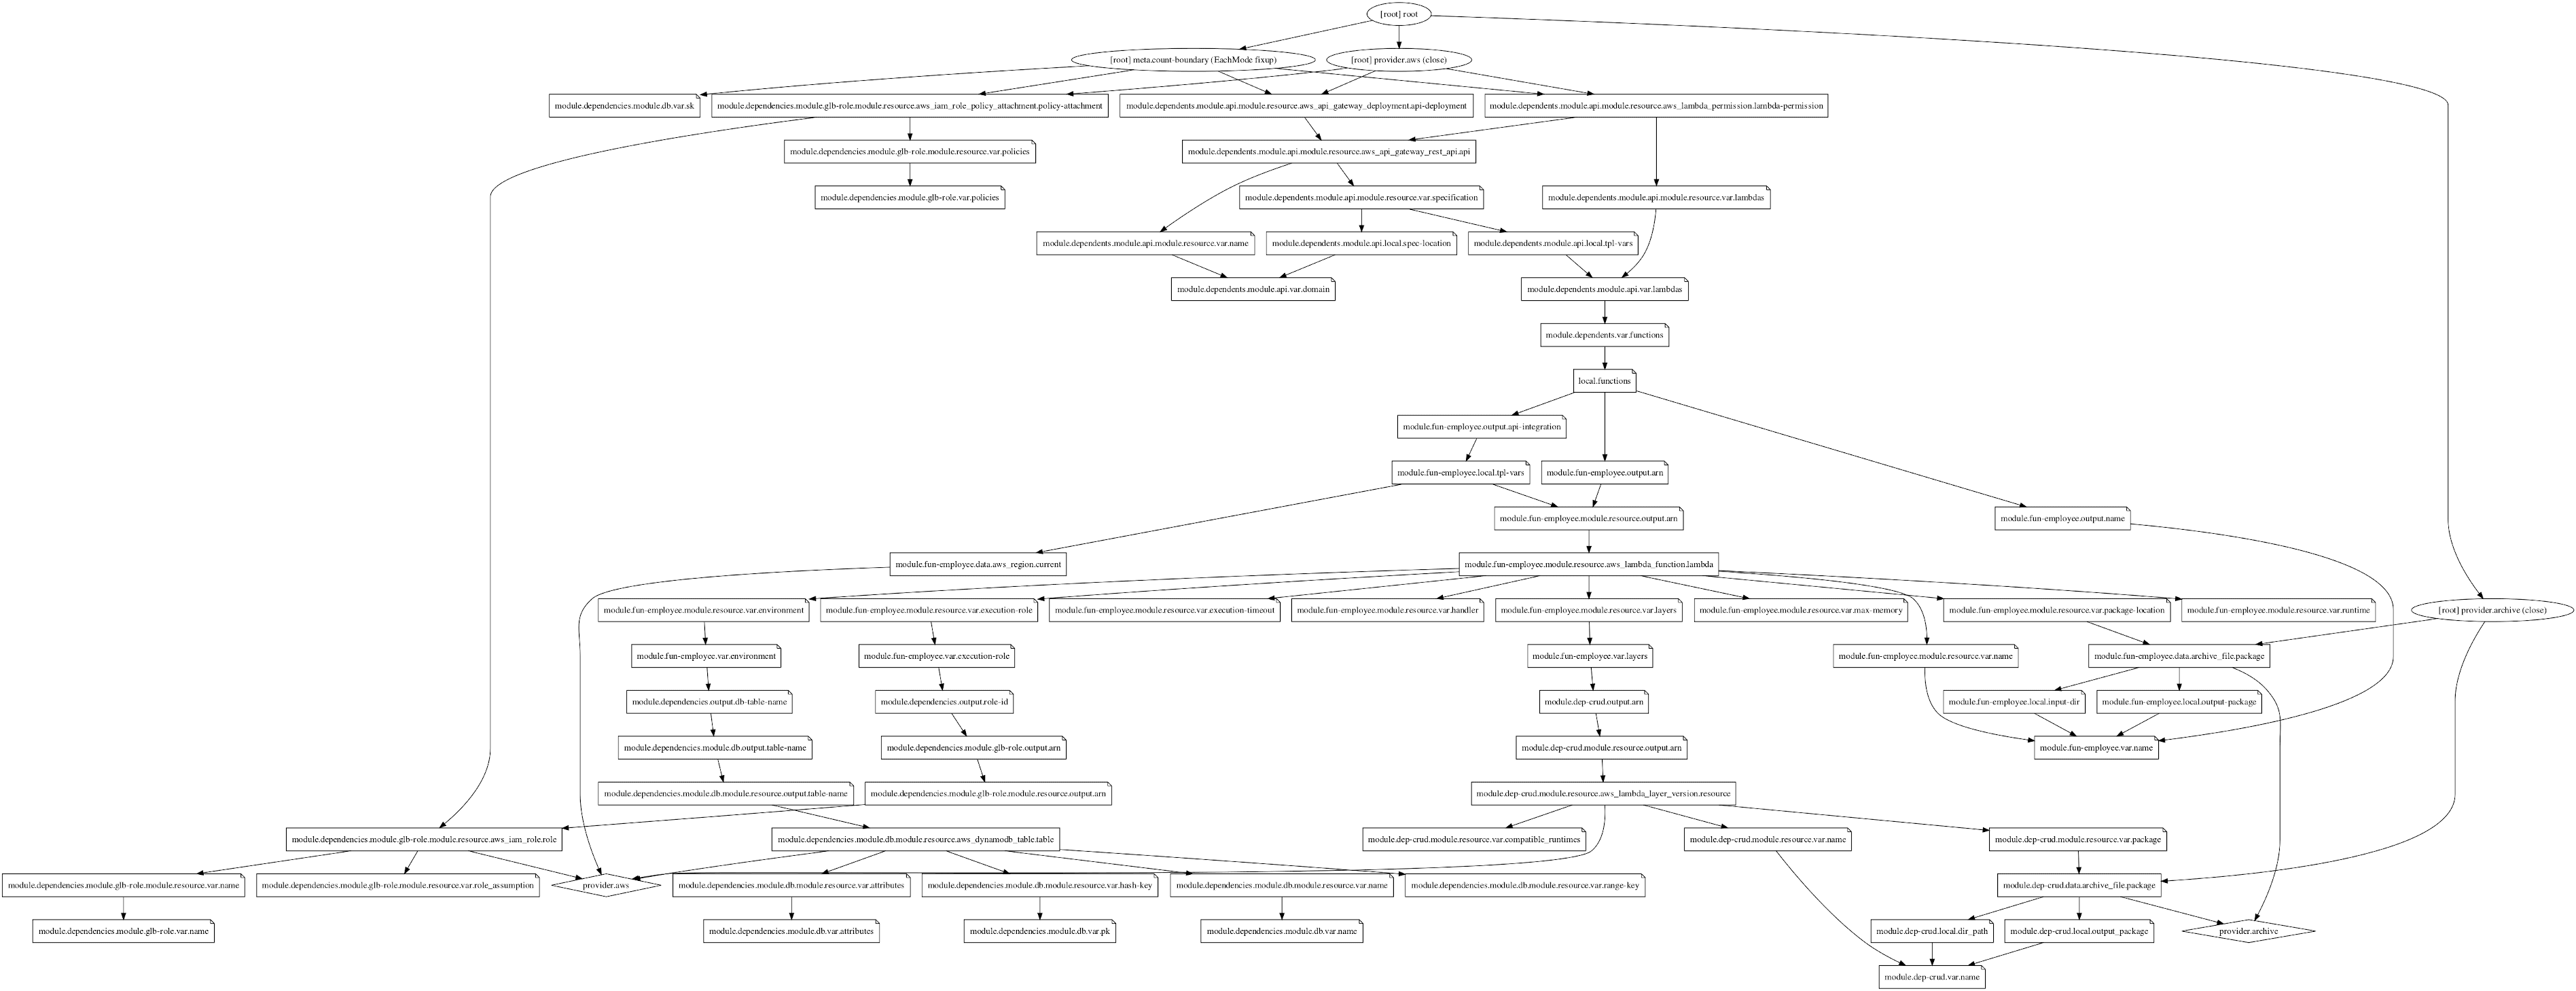 The Graphviz output of terraform graph